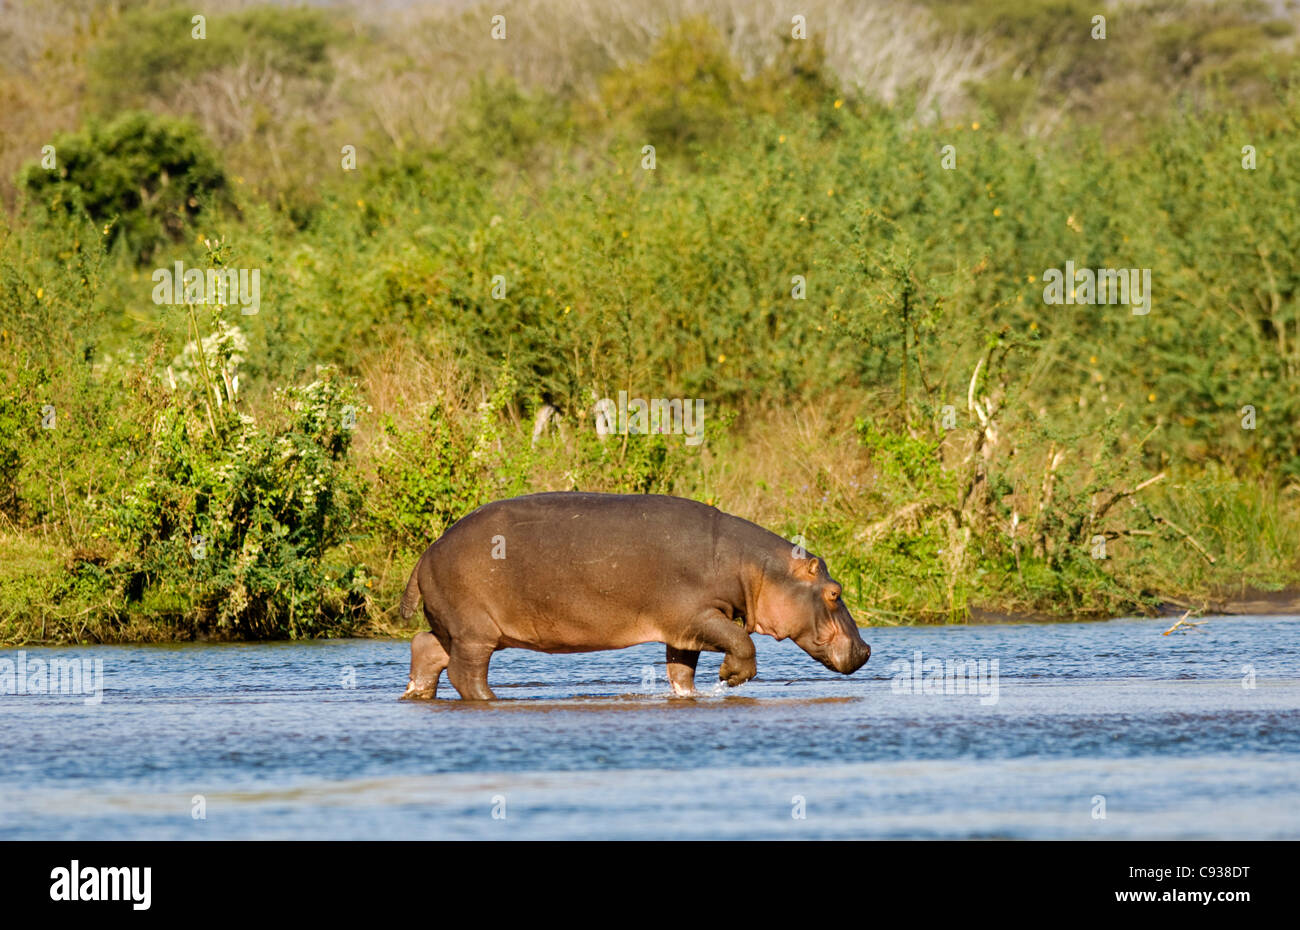 Malawi, Majete Wildlife Reserve. A hippopotamus crosses a narrow sand bar in the Shire River. Stock Photo